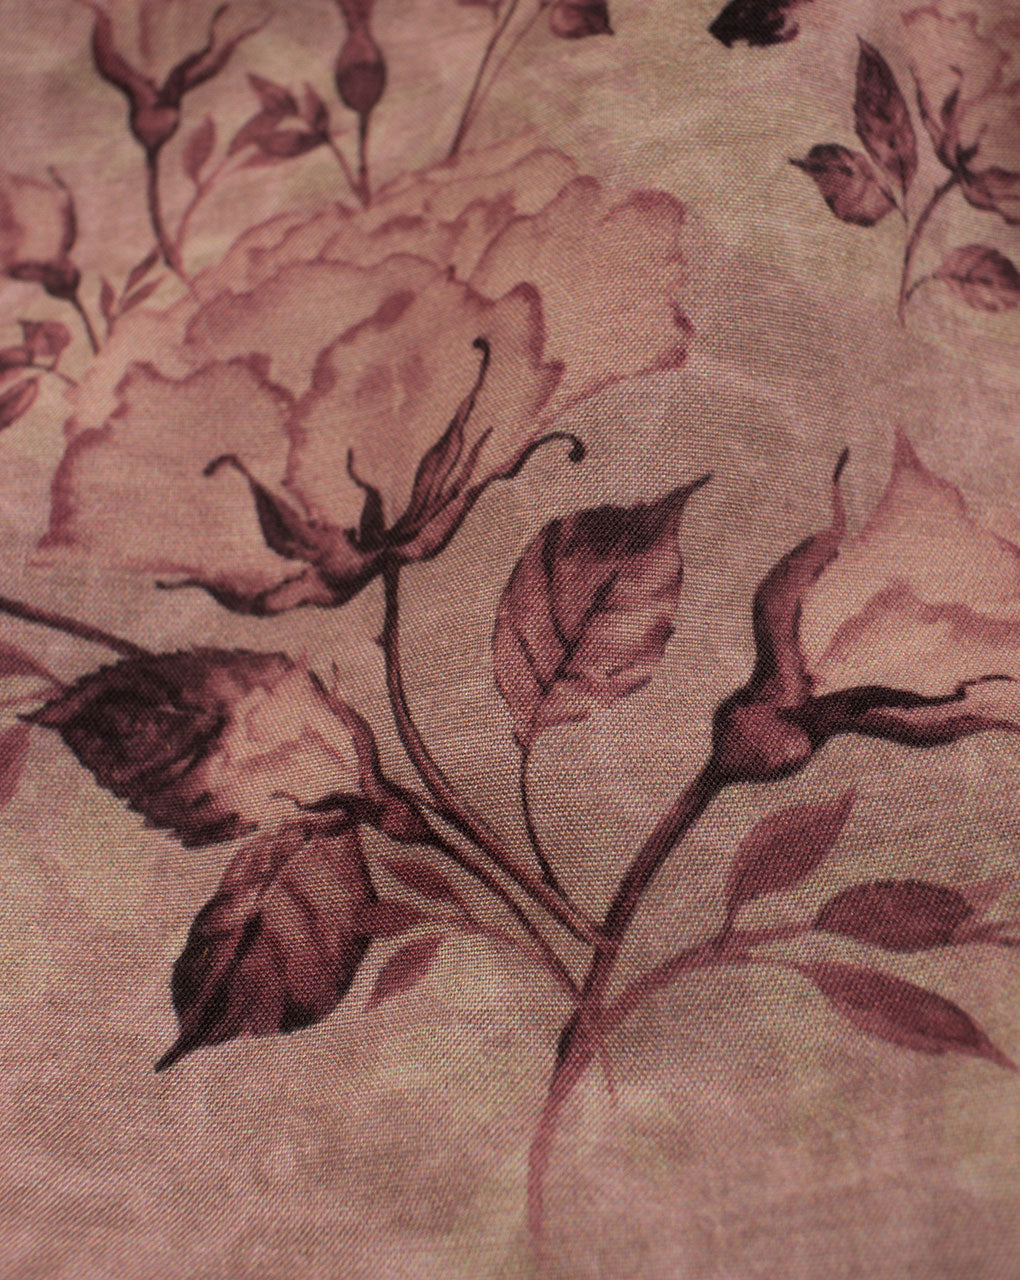 Floral Digital Print Poly Muslin Fabric - Fabriclore.com